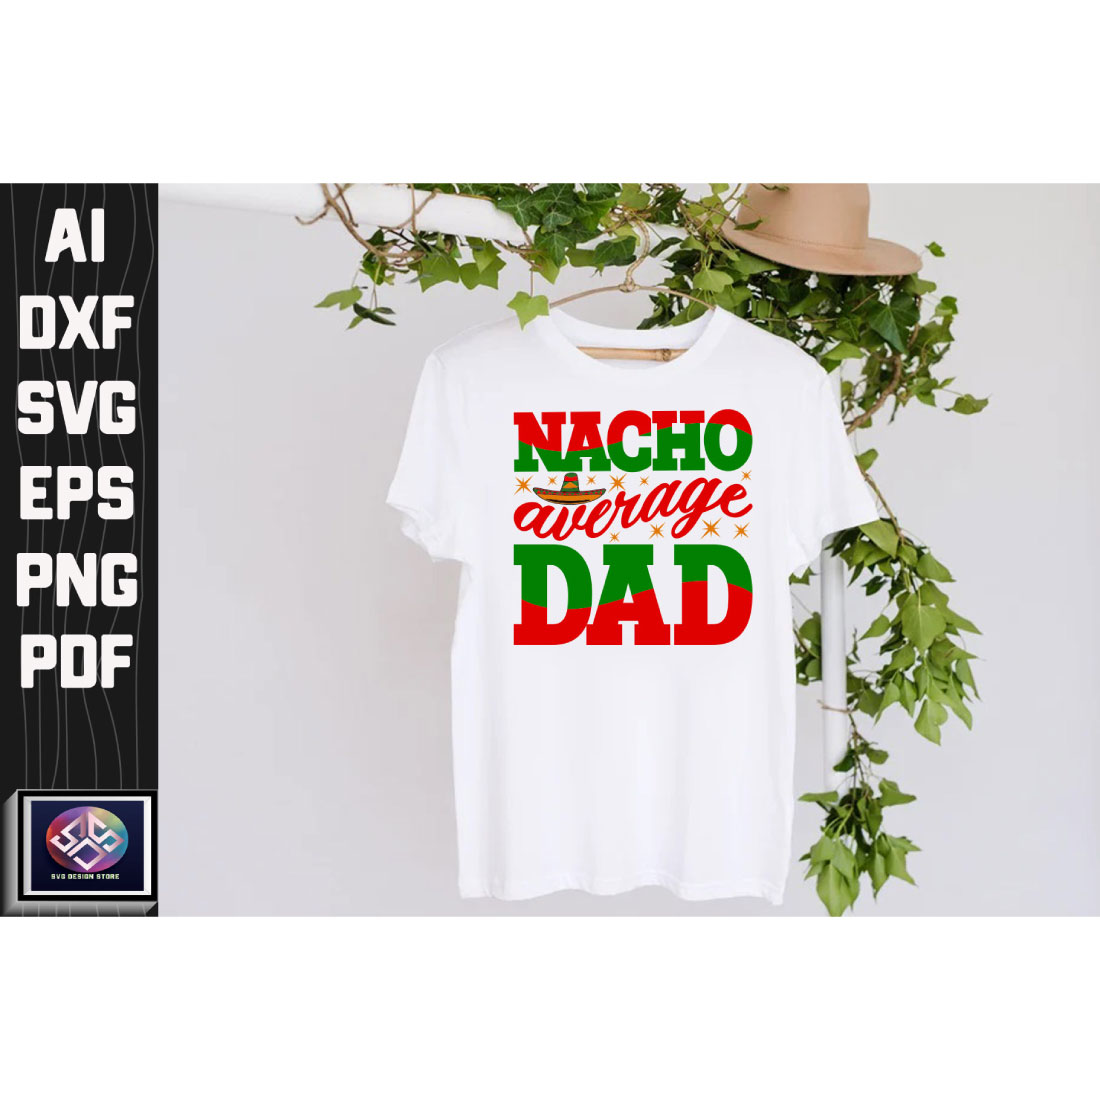 Nacho Average Dad preview image.